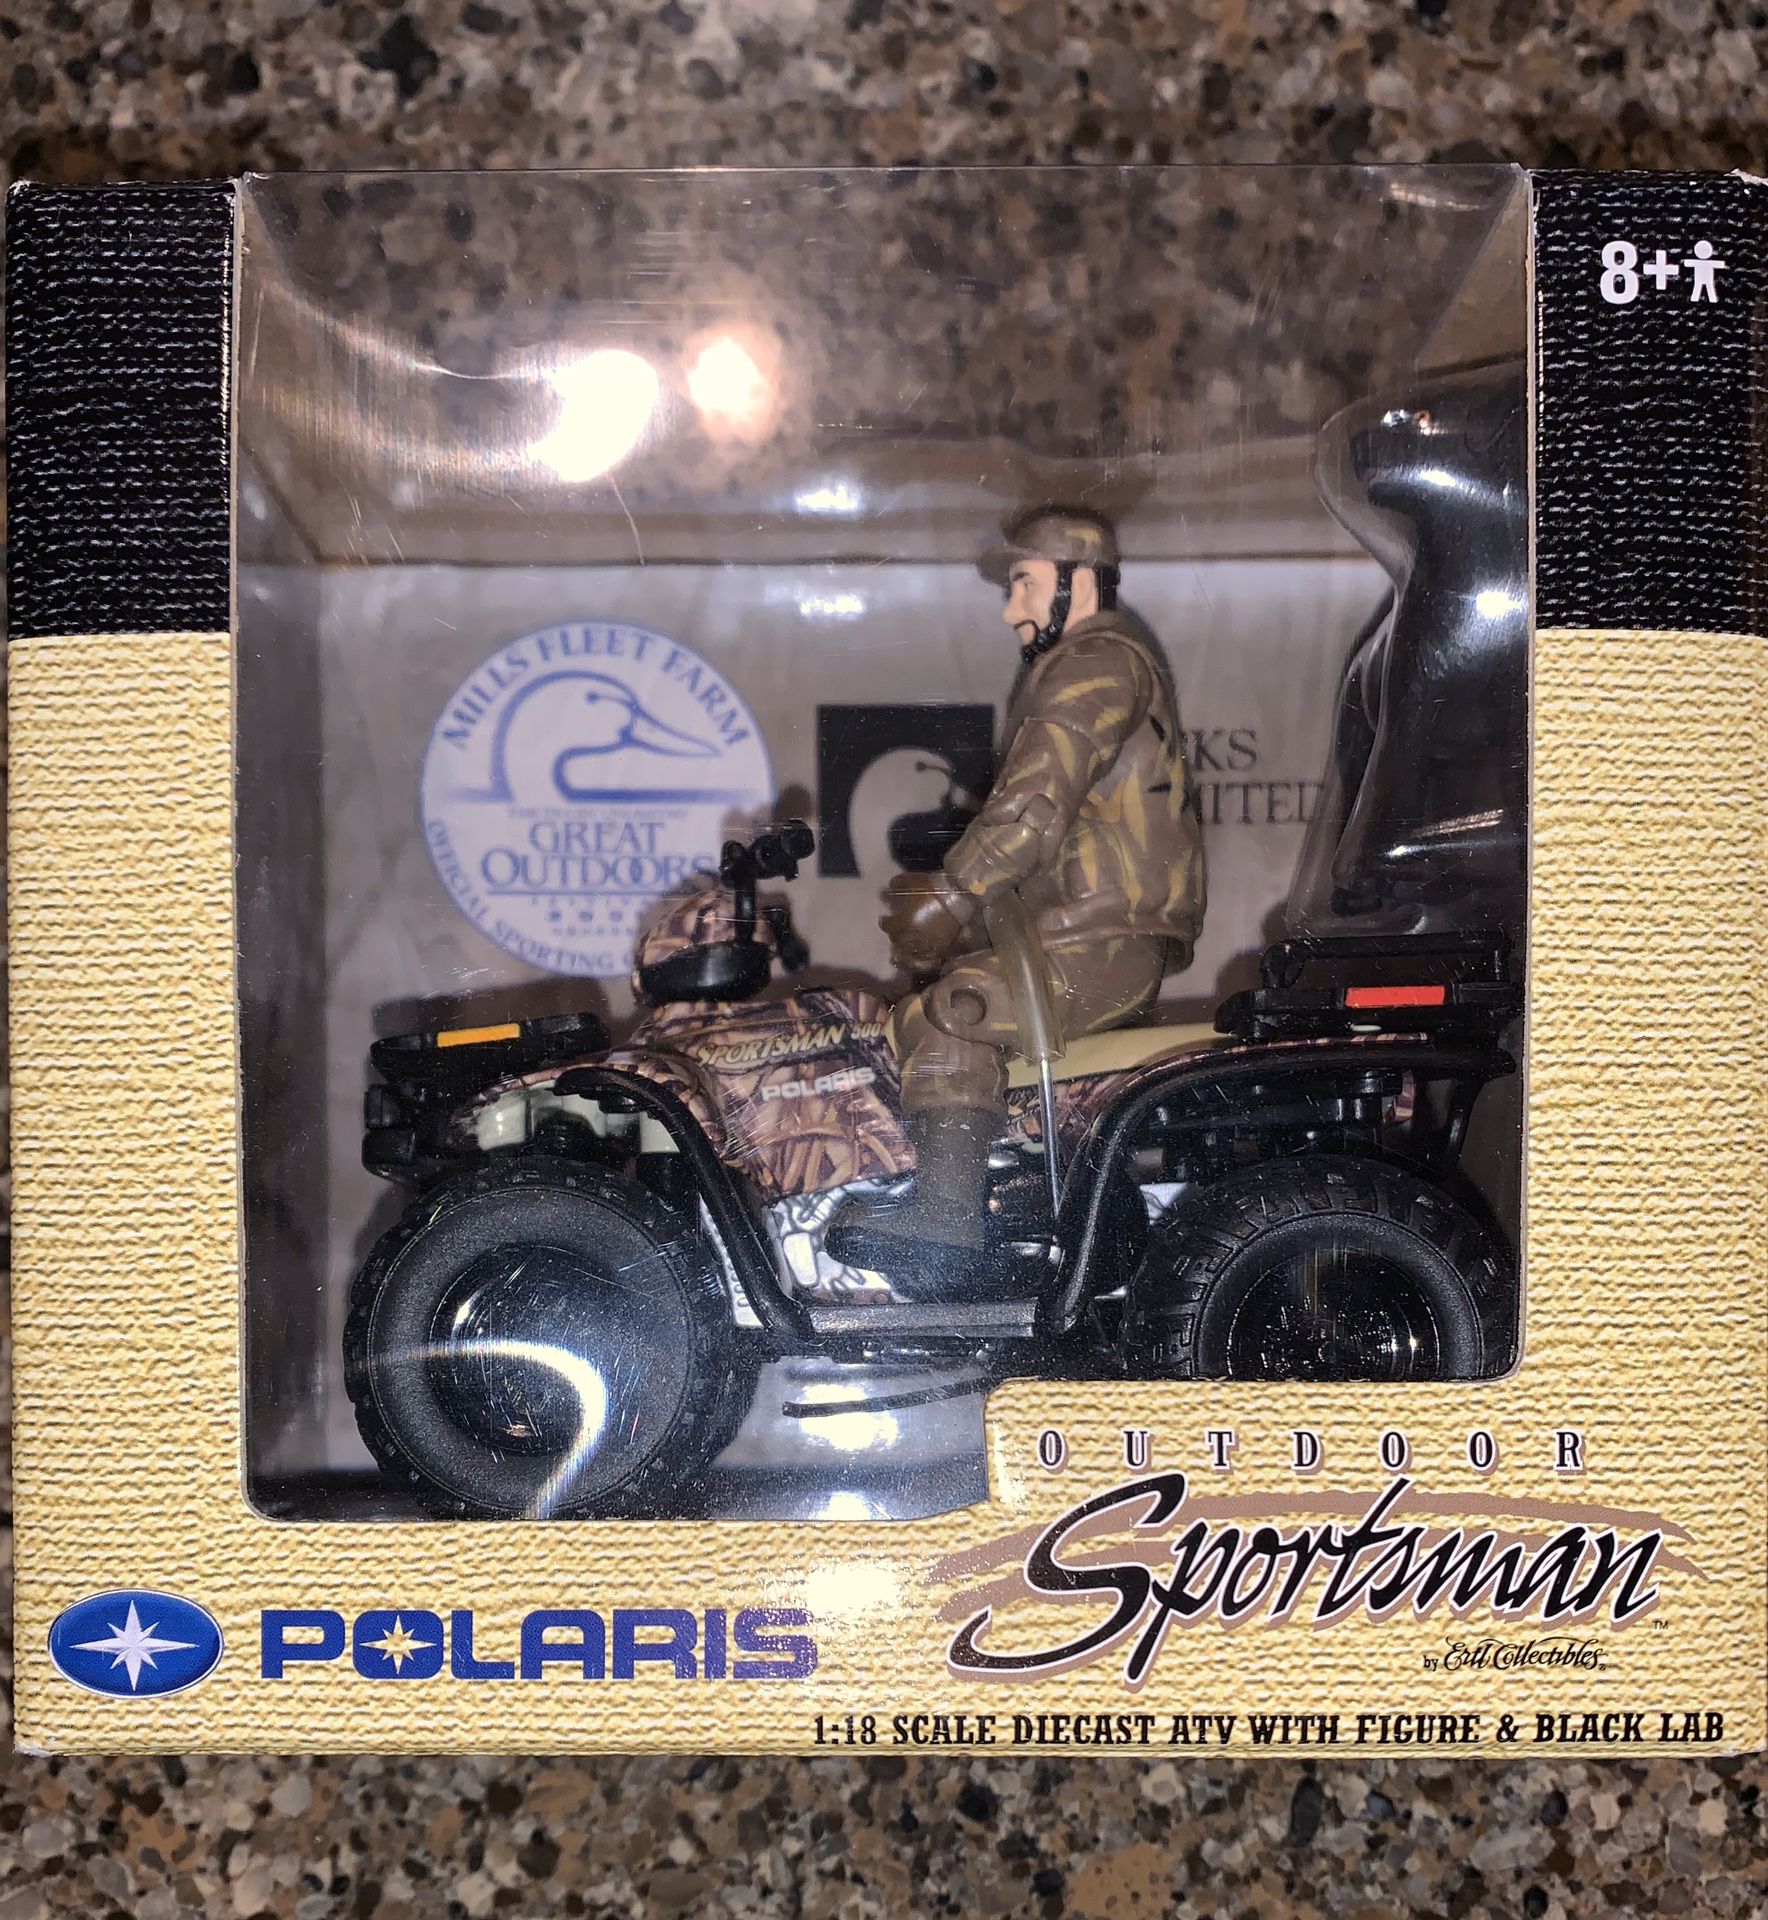 Polaris Outdoor Sportsman 1/18 Diecast ATV & Black Lab